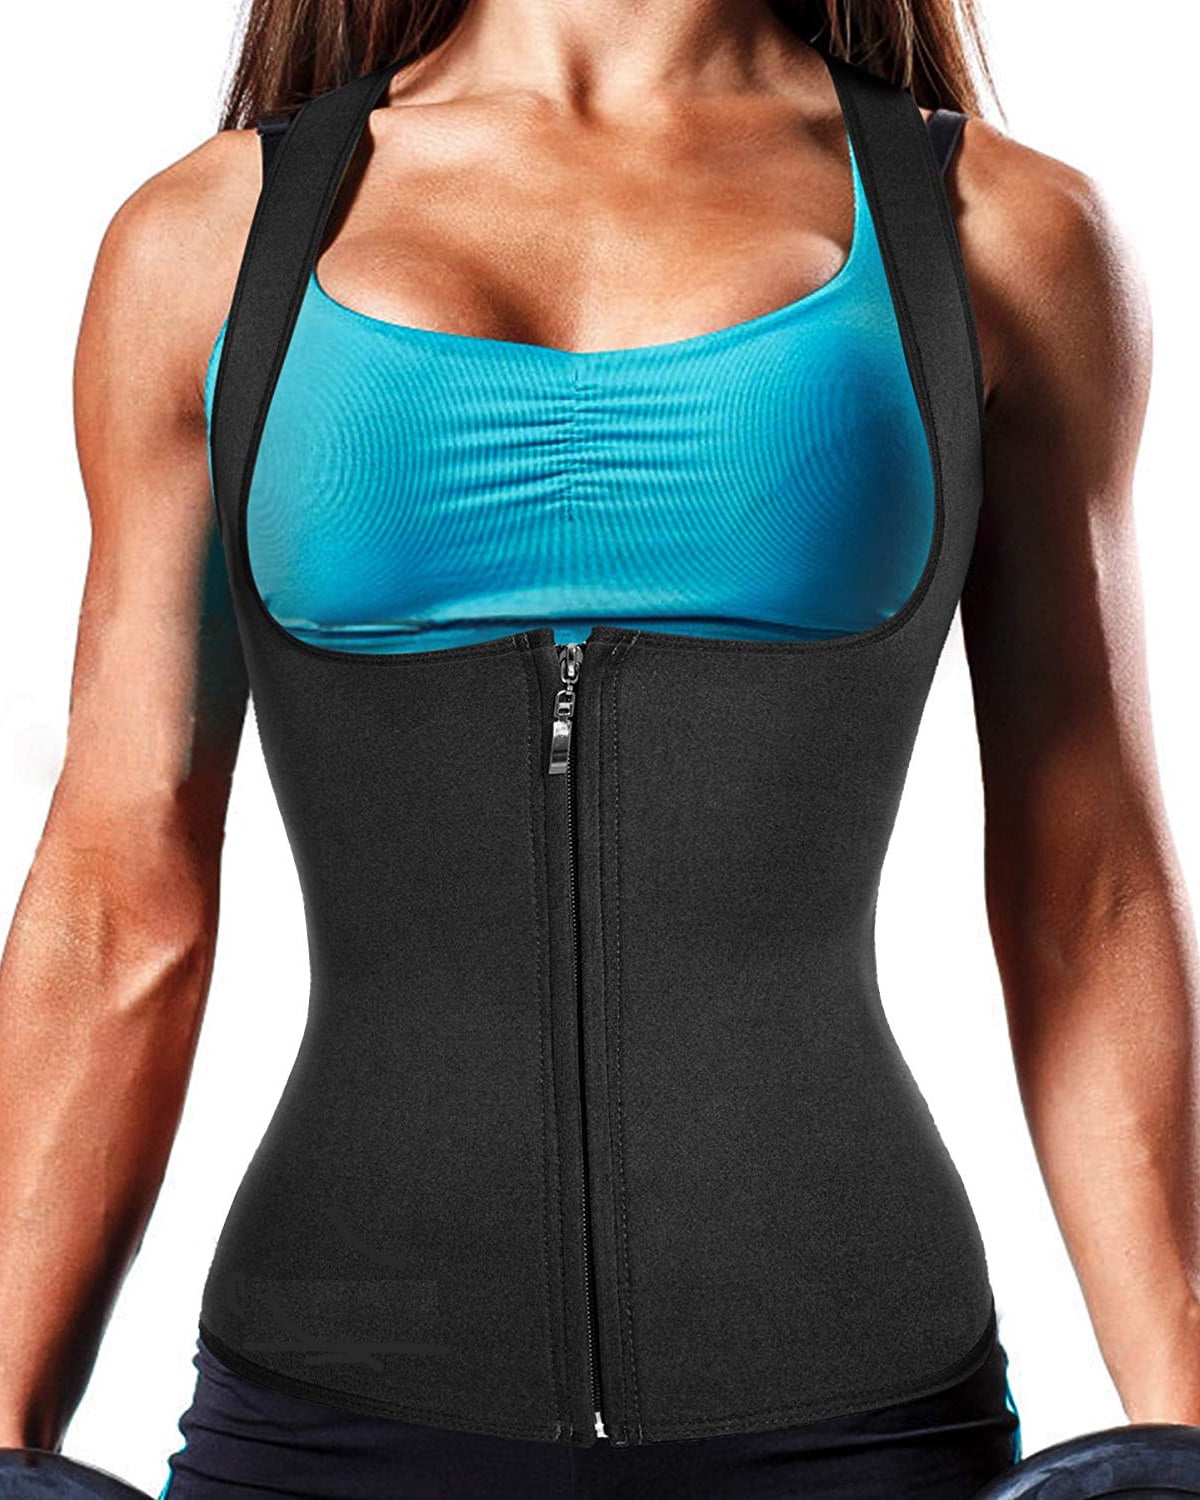 Gainkee Neoprene Sweat Waist Trainer Vest for Weight Loss Women Slimming Shirt Body Shaper with Sauna Suit Effect 